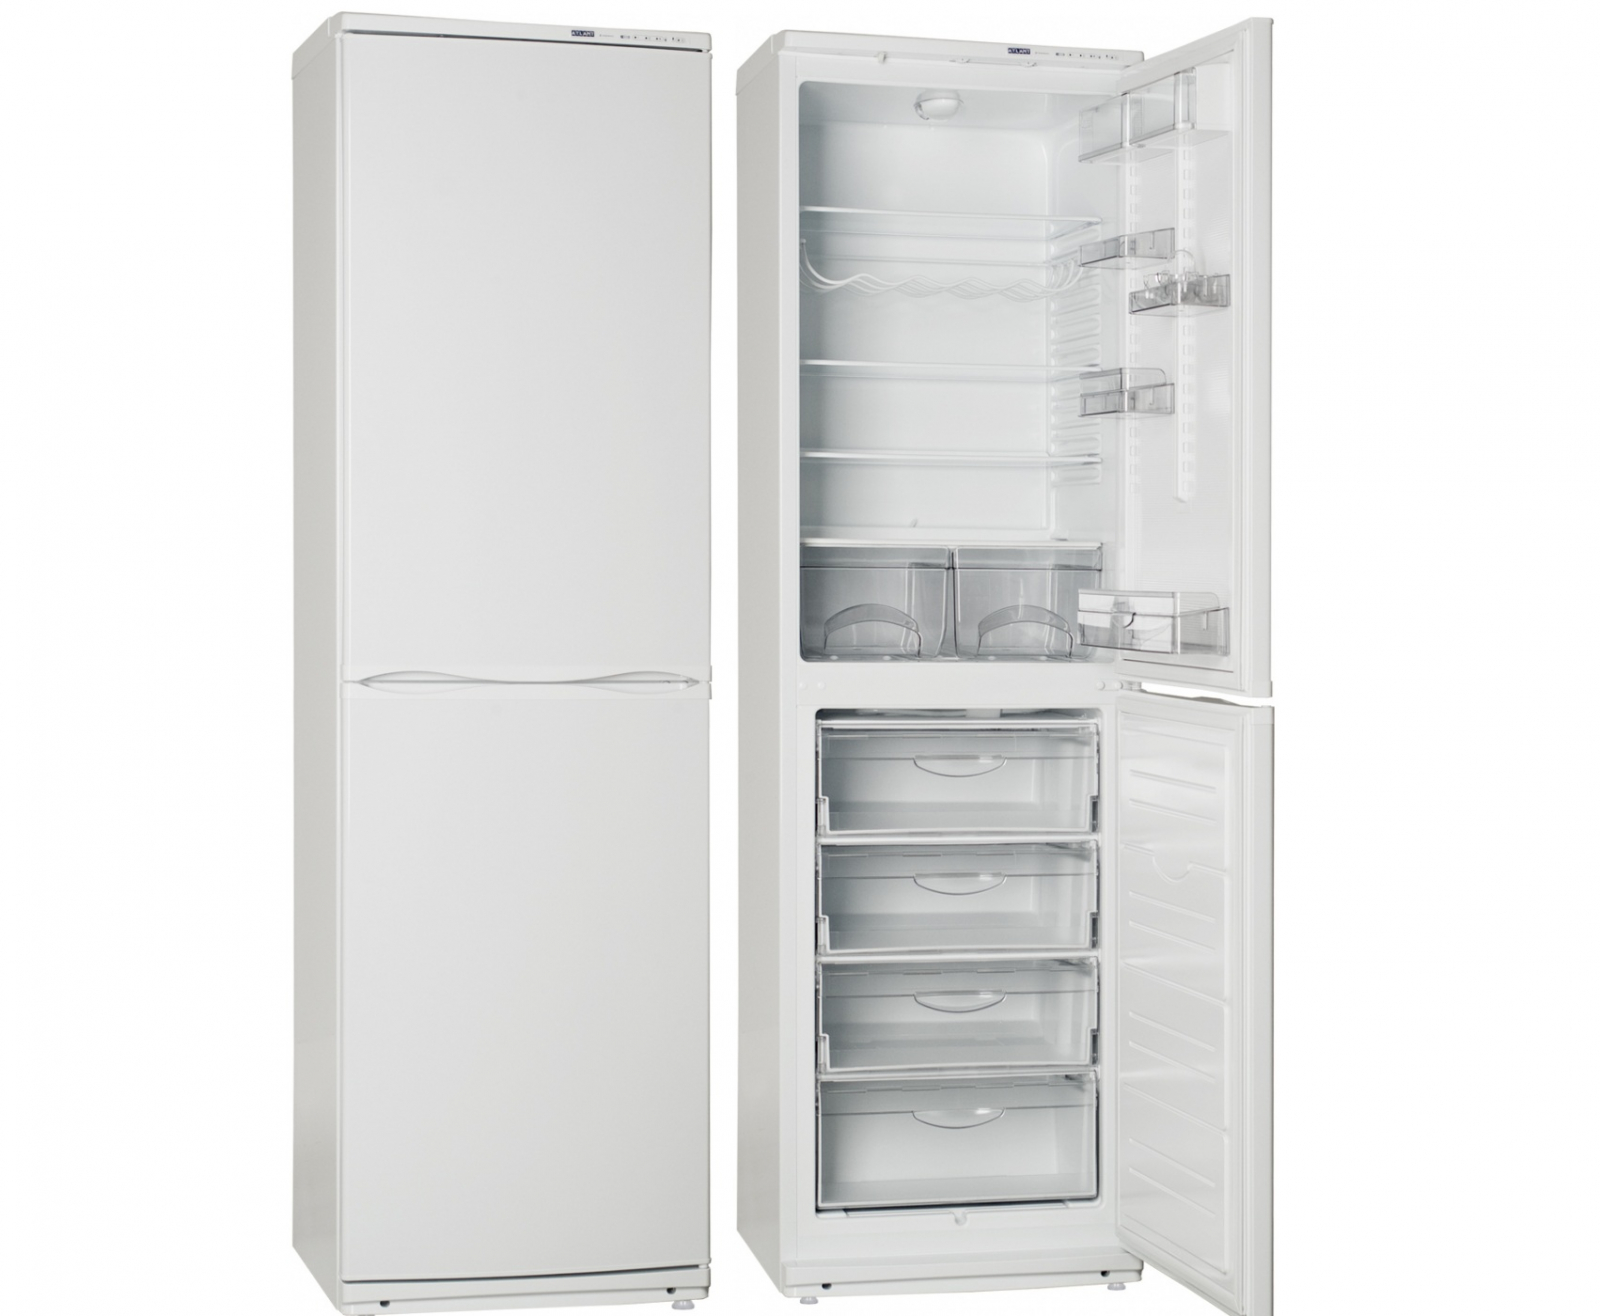 холодильник atlant xm 6025-031, купить в Красноярске холодильник atlant xm 6025-031,  купить в Красноярске дешево холодильник atlant xm 6025-031, купить в Красноярске минимальной цене холодильник atlant xm 6025-031